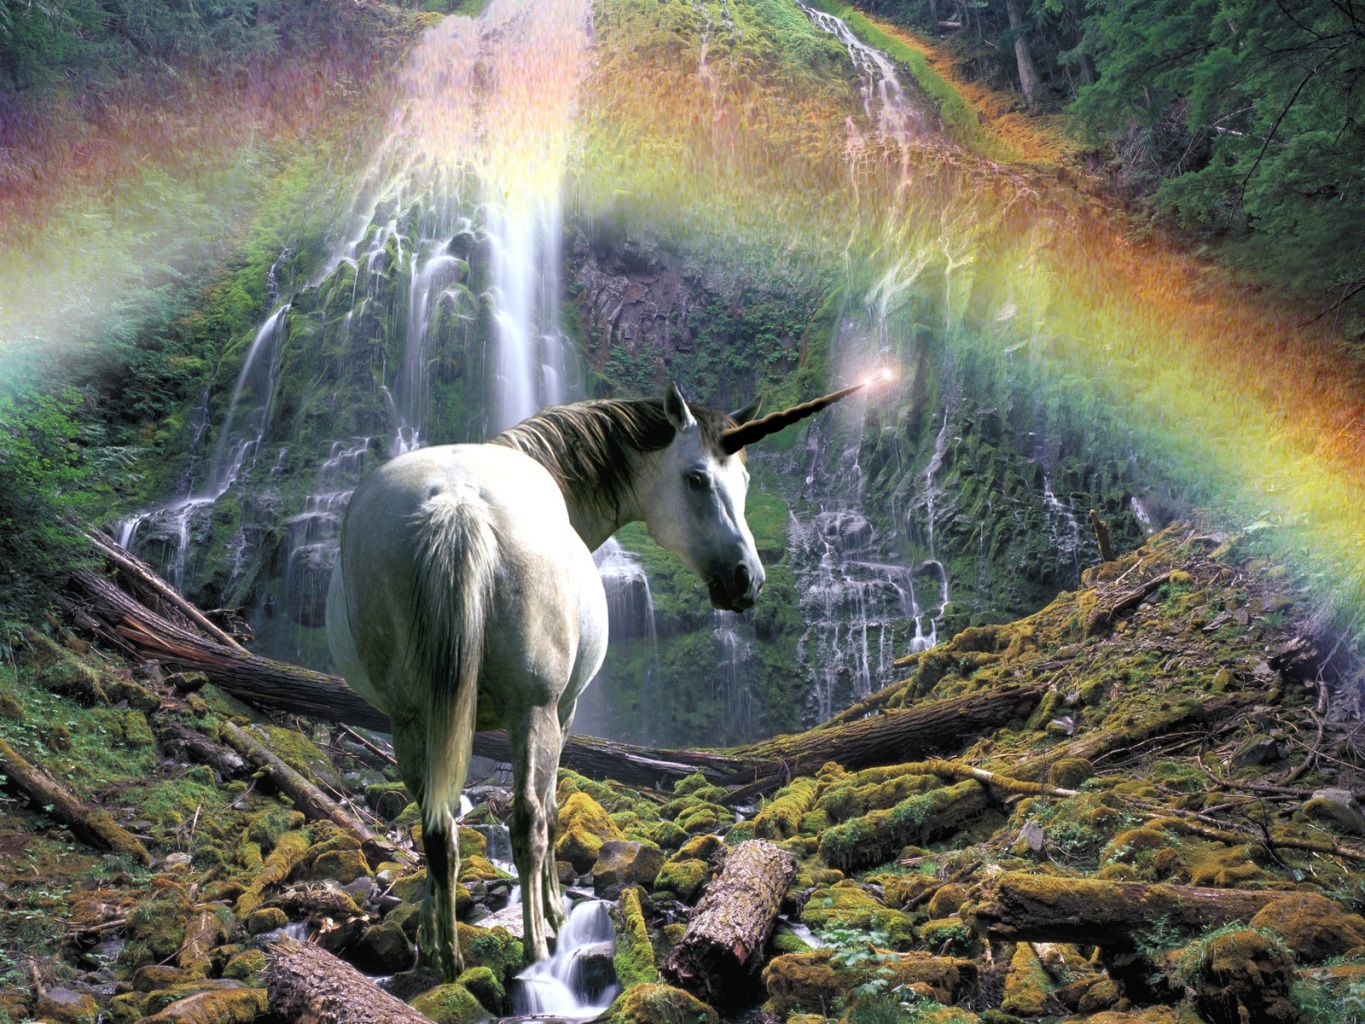 rainbow unicorn wallpaper widescreen